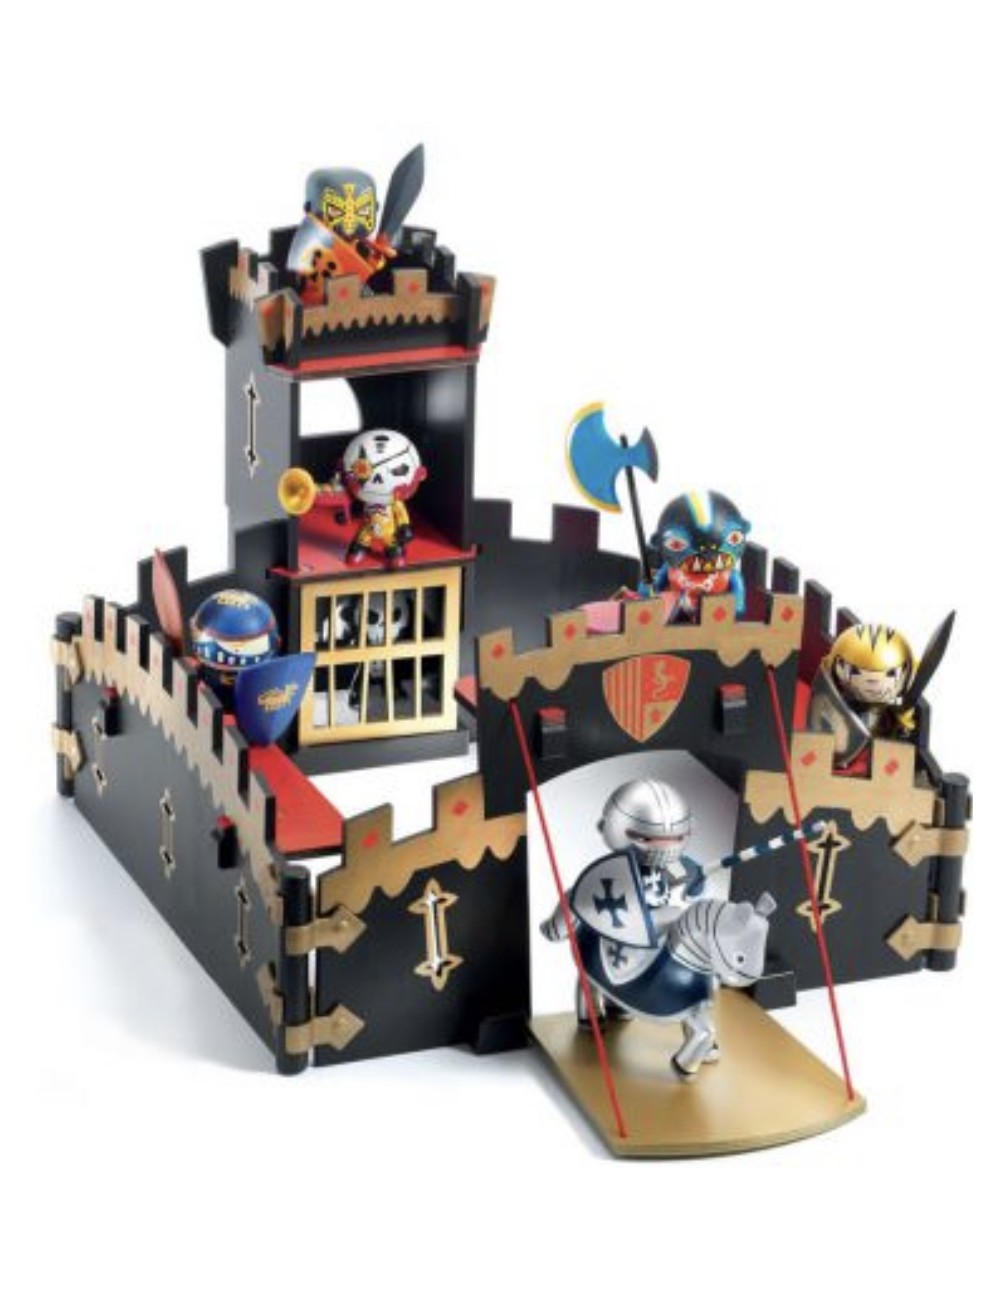 Ze Black Castel - Château Arty toys